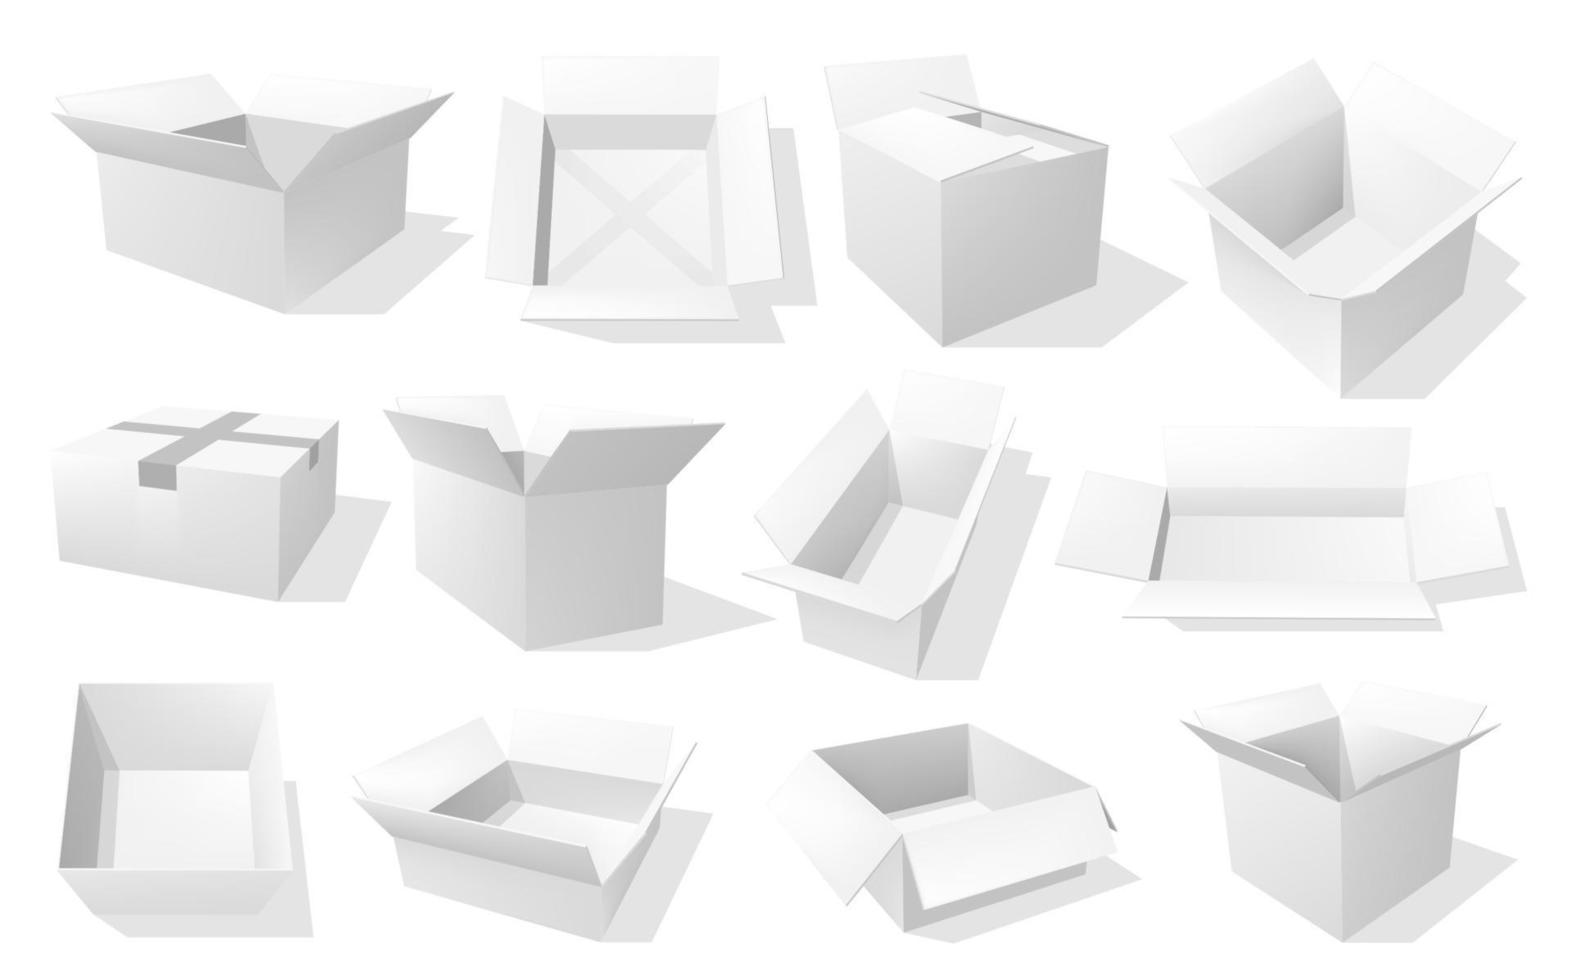 vit papper kartong låda, paket, packa prototyper vektor